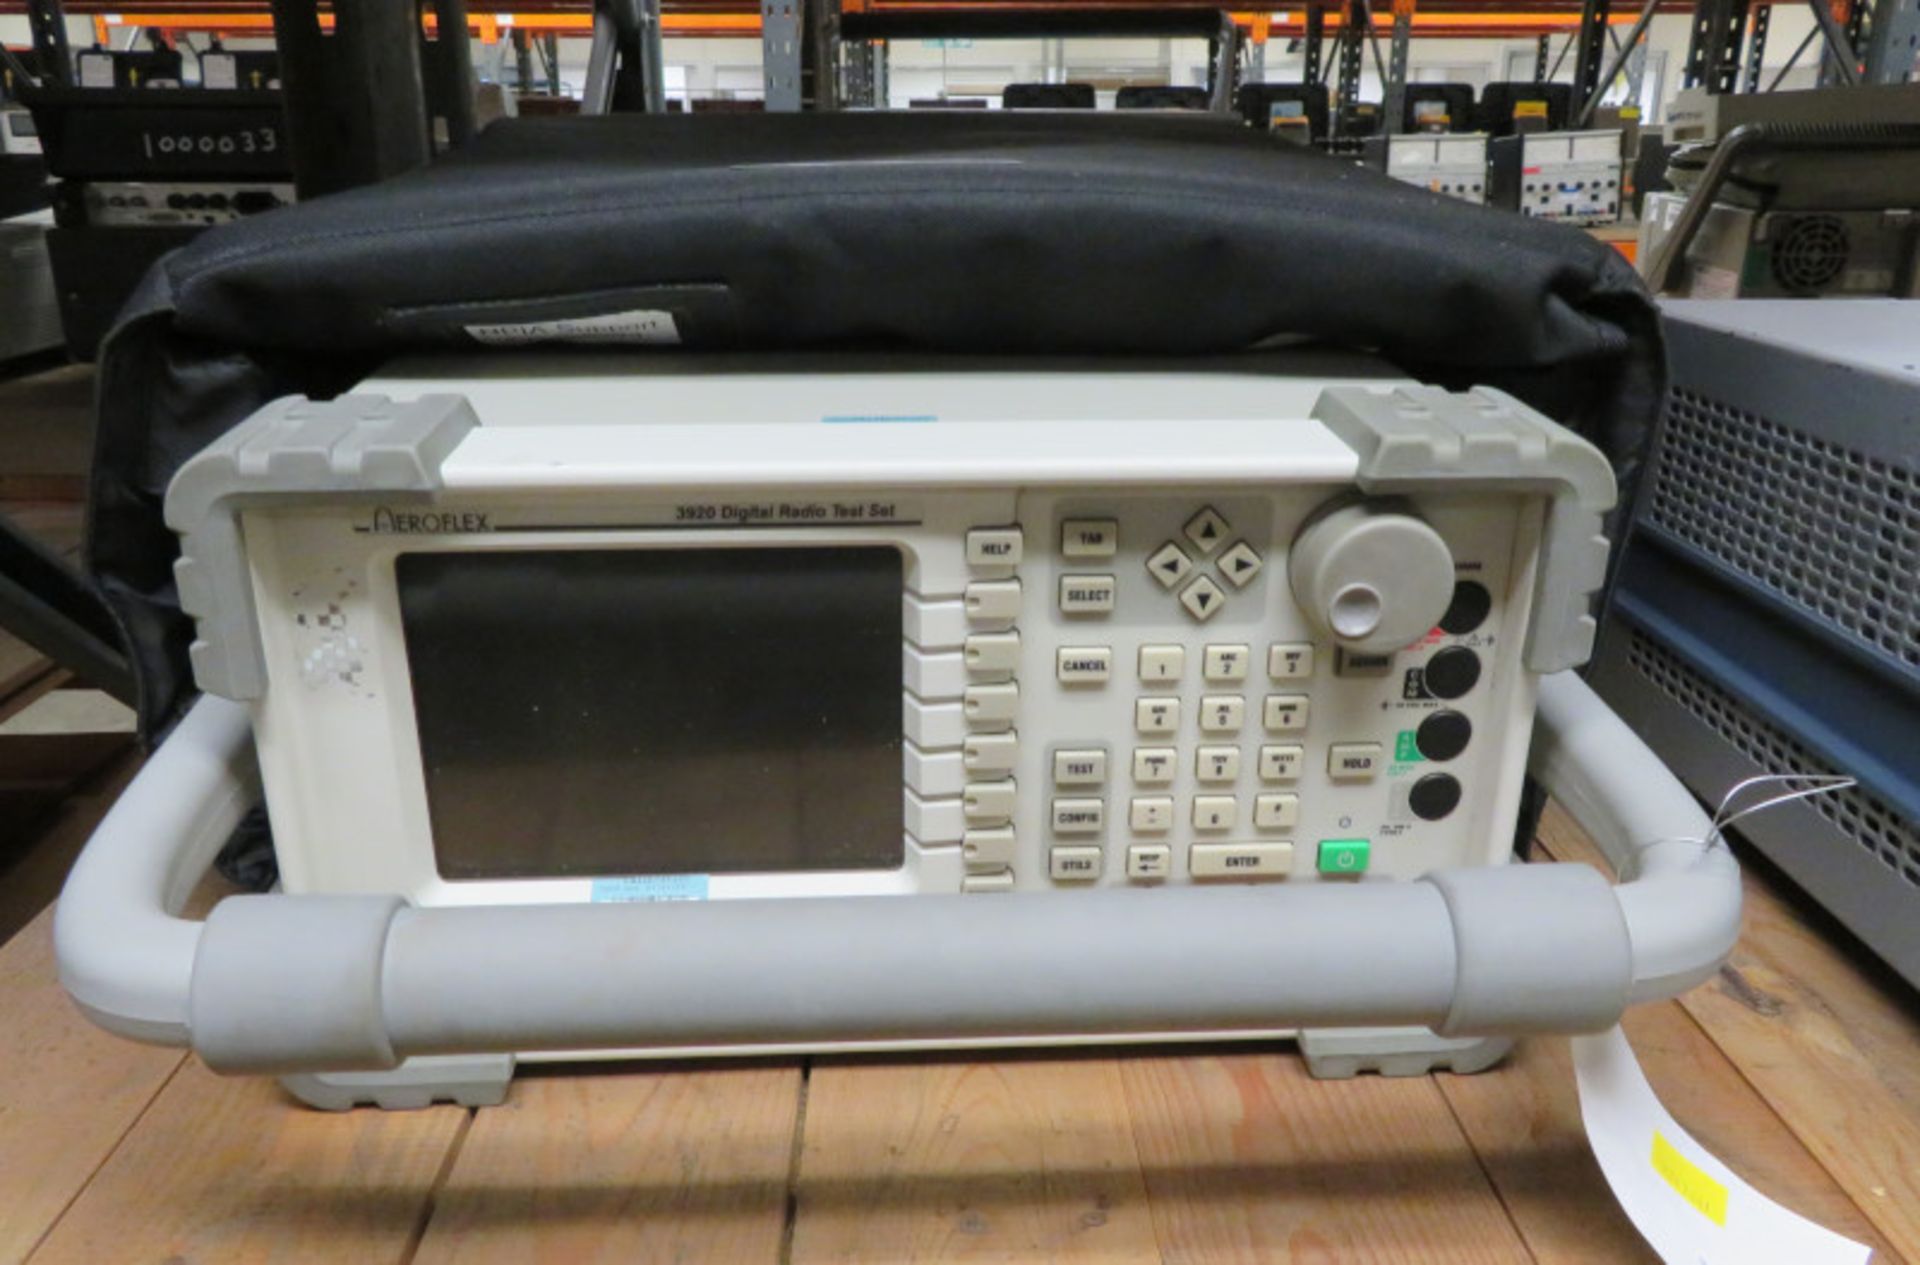 Aeroflex 3920 Digital Radio Test Set in Padded Carry Bag